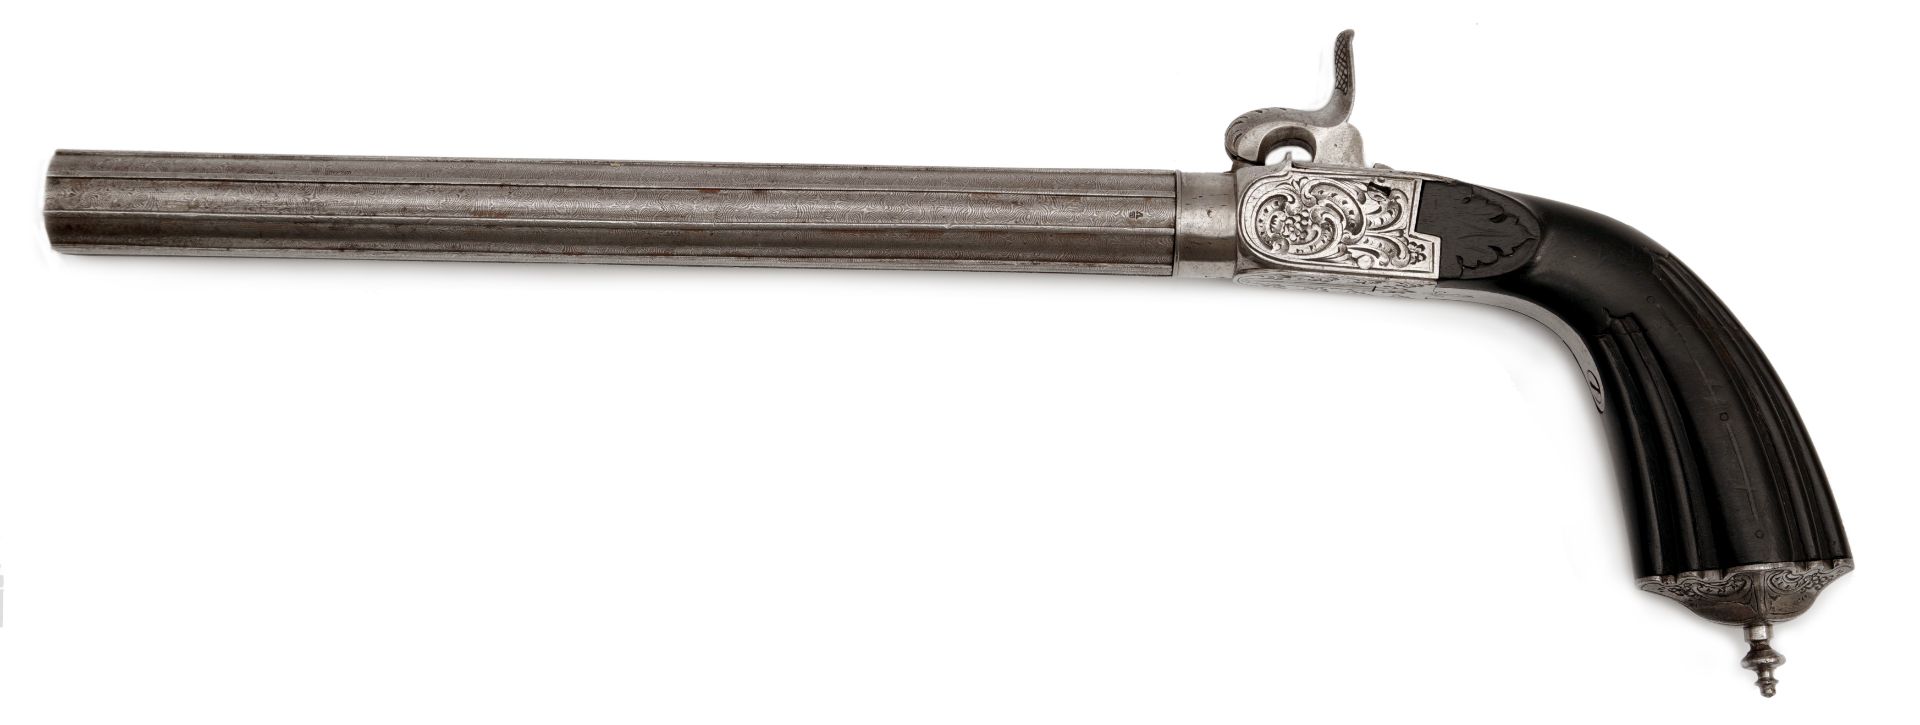 A Percussion Cap Pocket Pistol with Long Barrel - Image 2 of 7